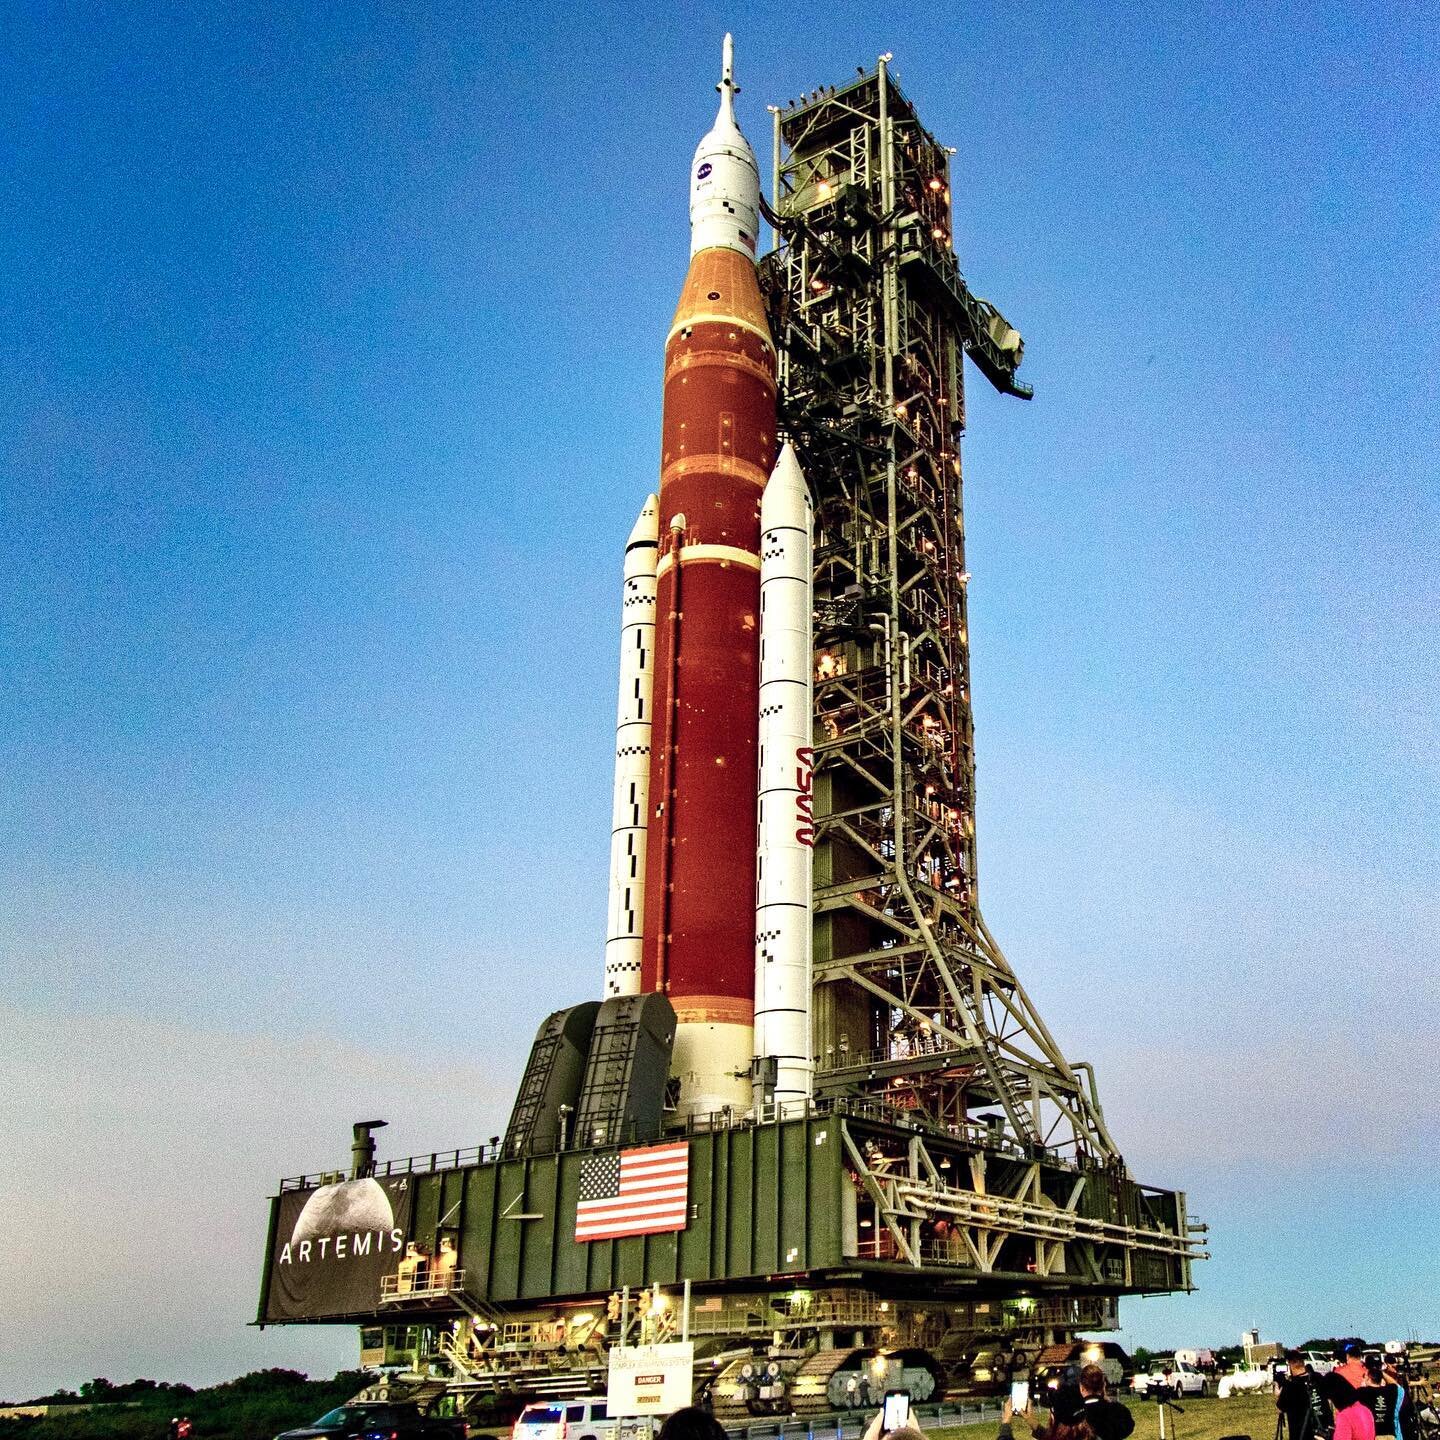 Twenty days until
The Artemis 1 rocket
Launches to the Moon 🚀 

#haiku #haikutoyoutoo #rocketlaunchhaiku
.
.
.
.
#artemis1 #sls #nasamoonsnap #nasa #space #artemis #moon #rocketlaunch #rocket #spacelaunchsystem #spacex #blueorigin #esa #spacecoast #